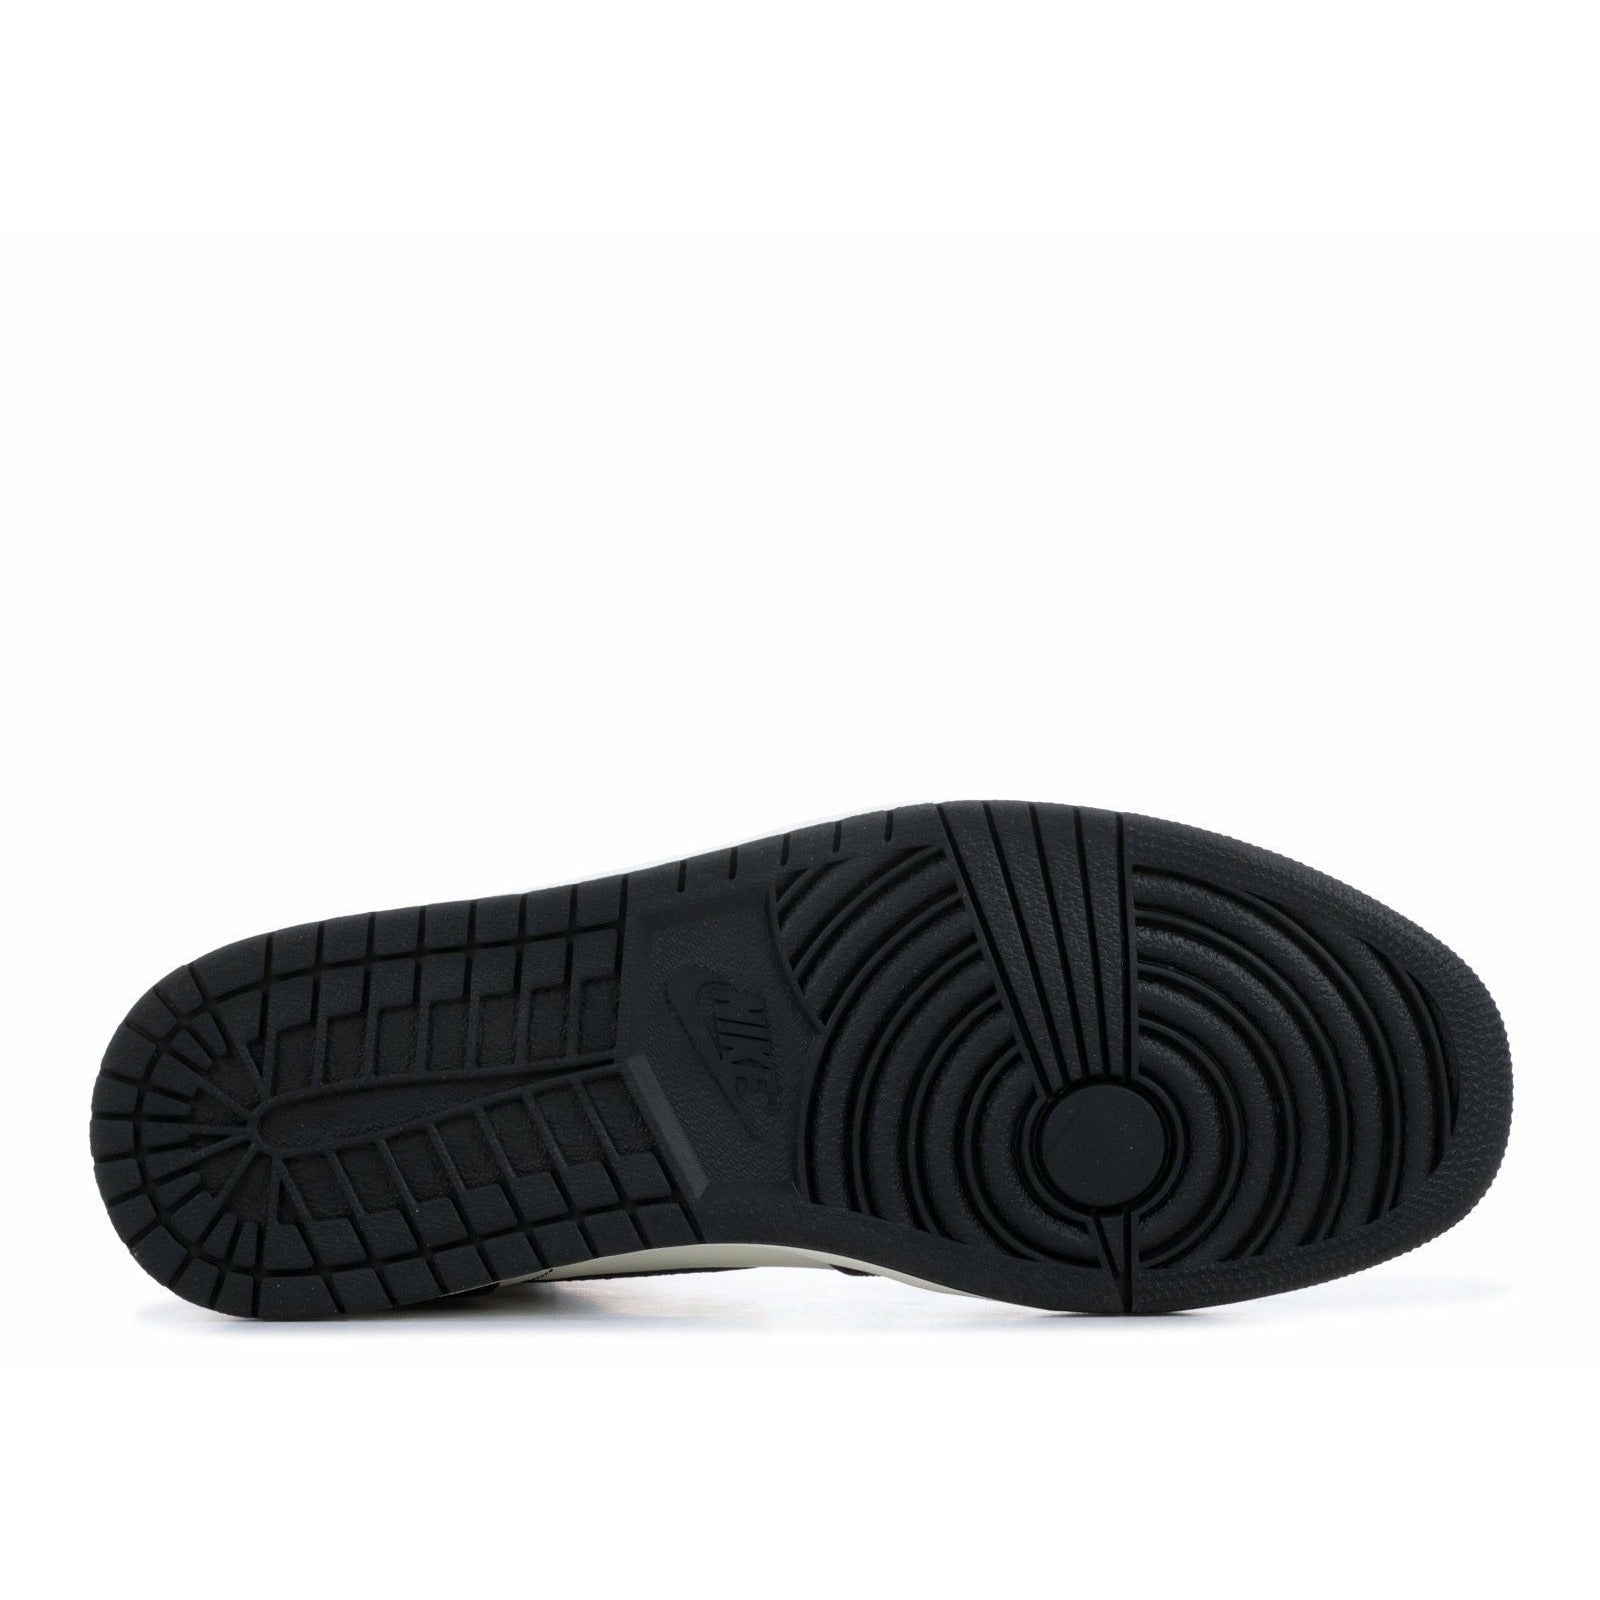 Air Jordan-Air Jordan 1 High OG Defiant SB "LA to Chi"-Air Jordan 1 High OG Defiant SB ‰ÛÏLA to Chicago‰۝ Sneakers
Product Code: CD6578-507 Colour: COURT PURPLE/BLACK-SAIL-UNIVERSITY GOLD Year of release: 2019 | MrSneaker is Europe's number 1 exclusive sneaker store.-mrsneaker